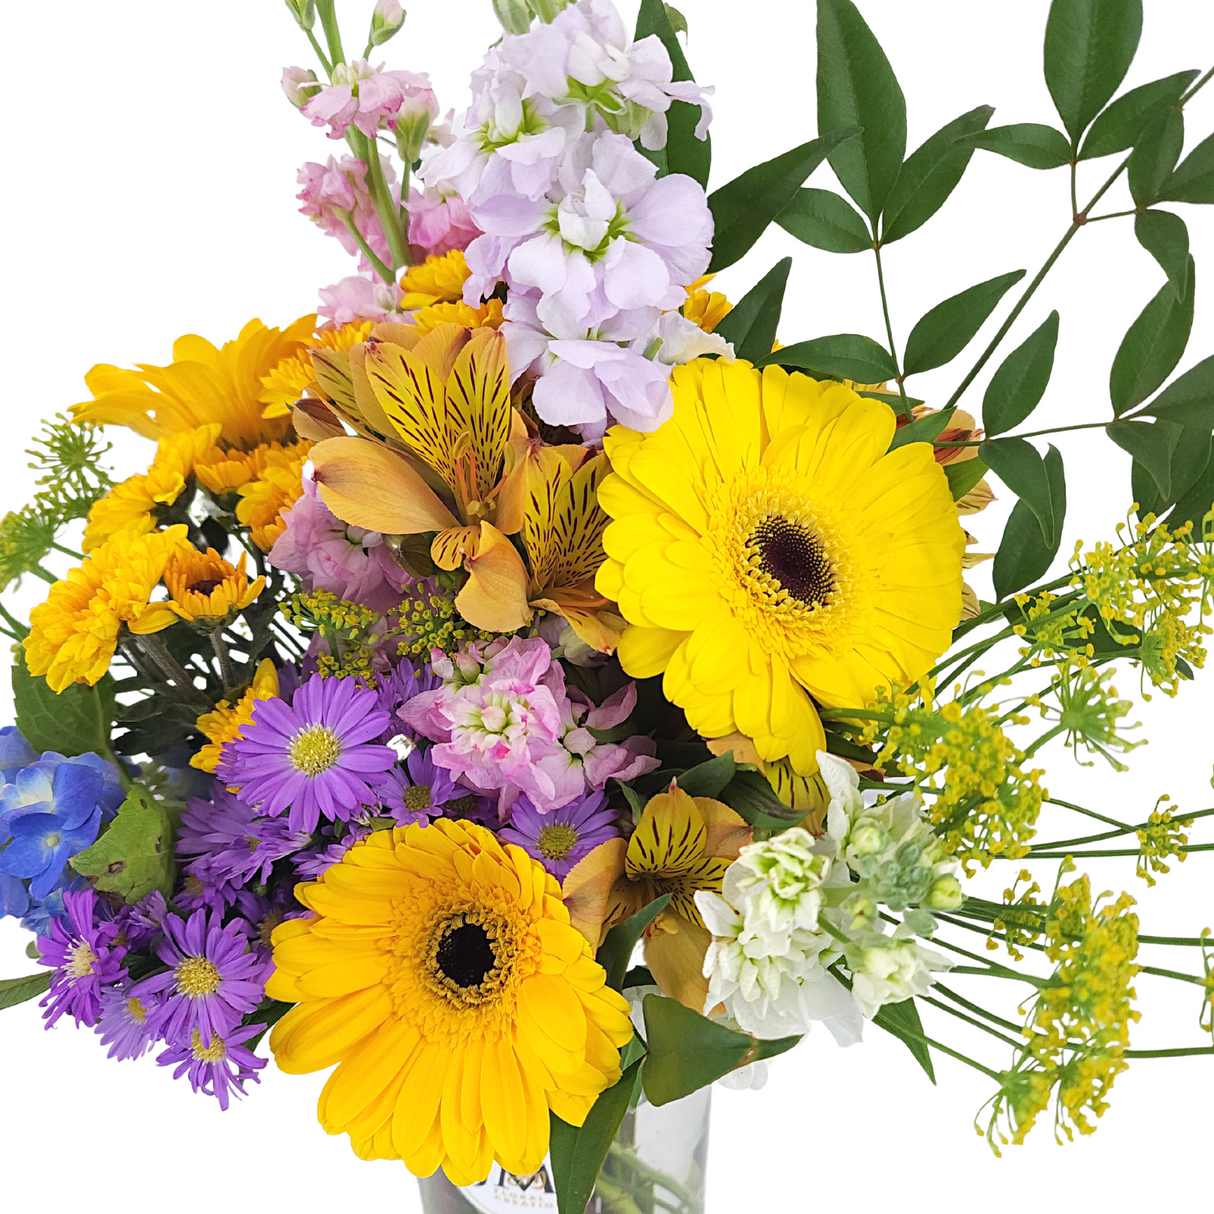 maritza Blue and Yellow Vase Arrangement Birthday Flower Bouquet Singapore